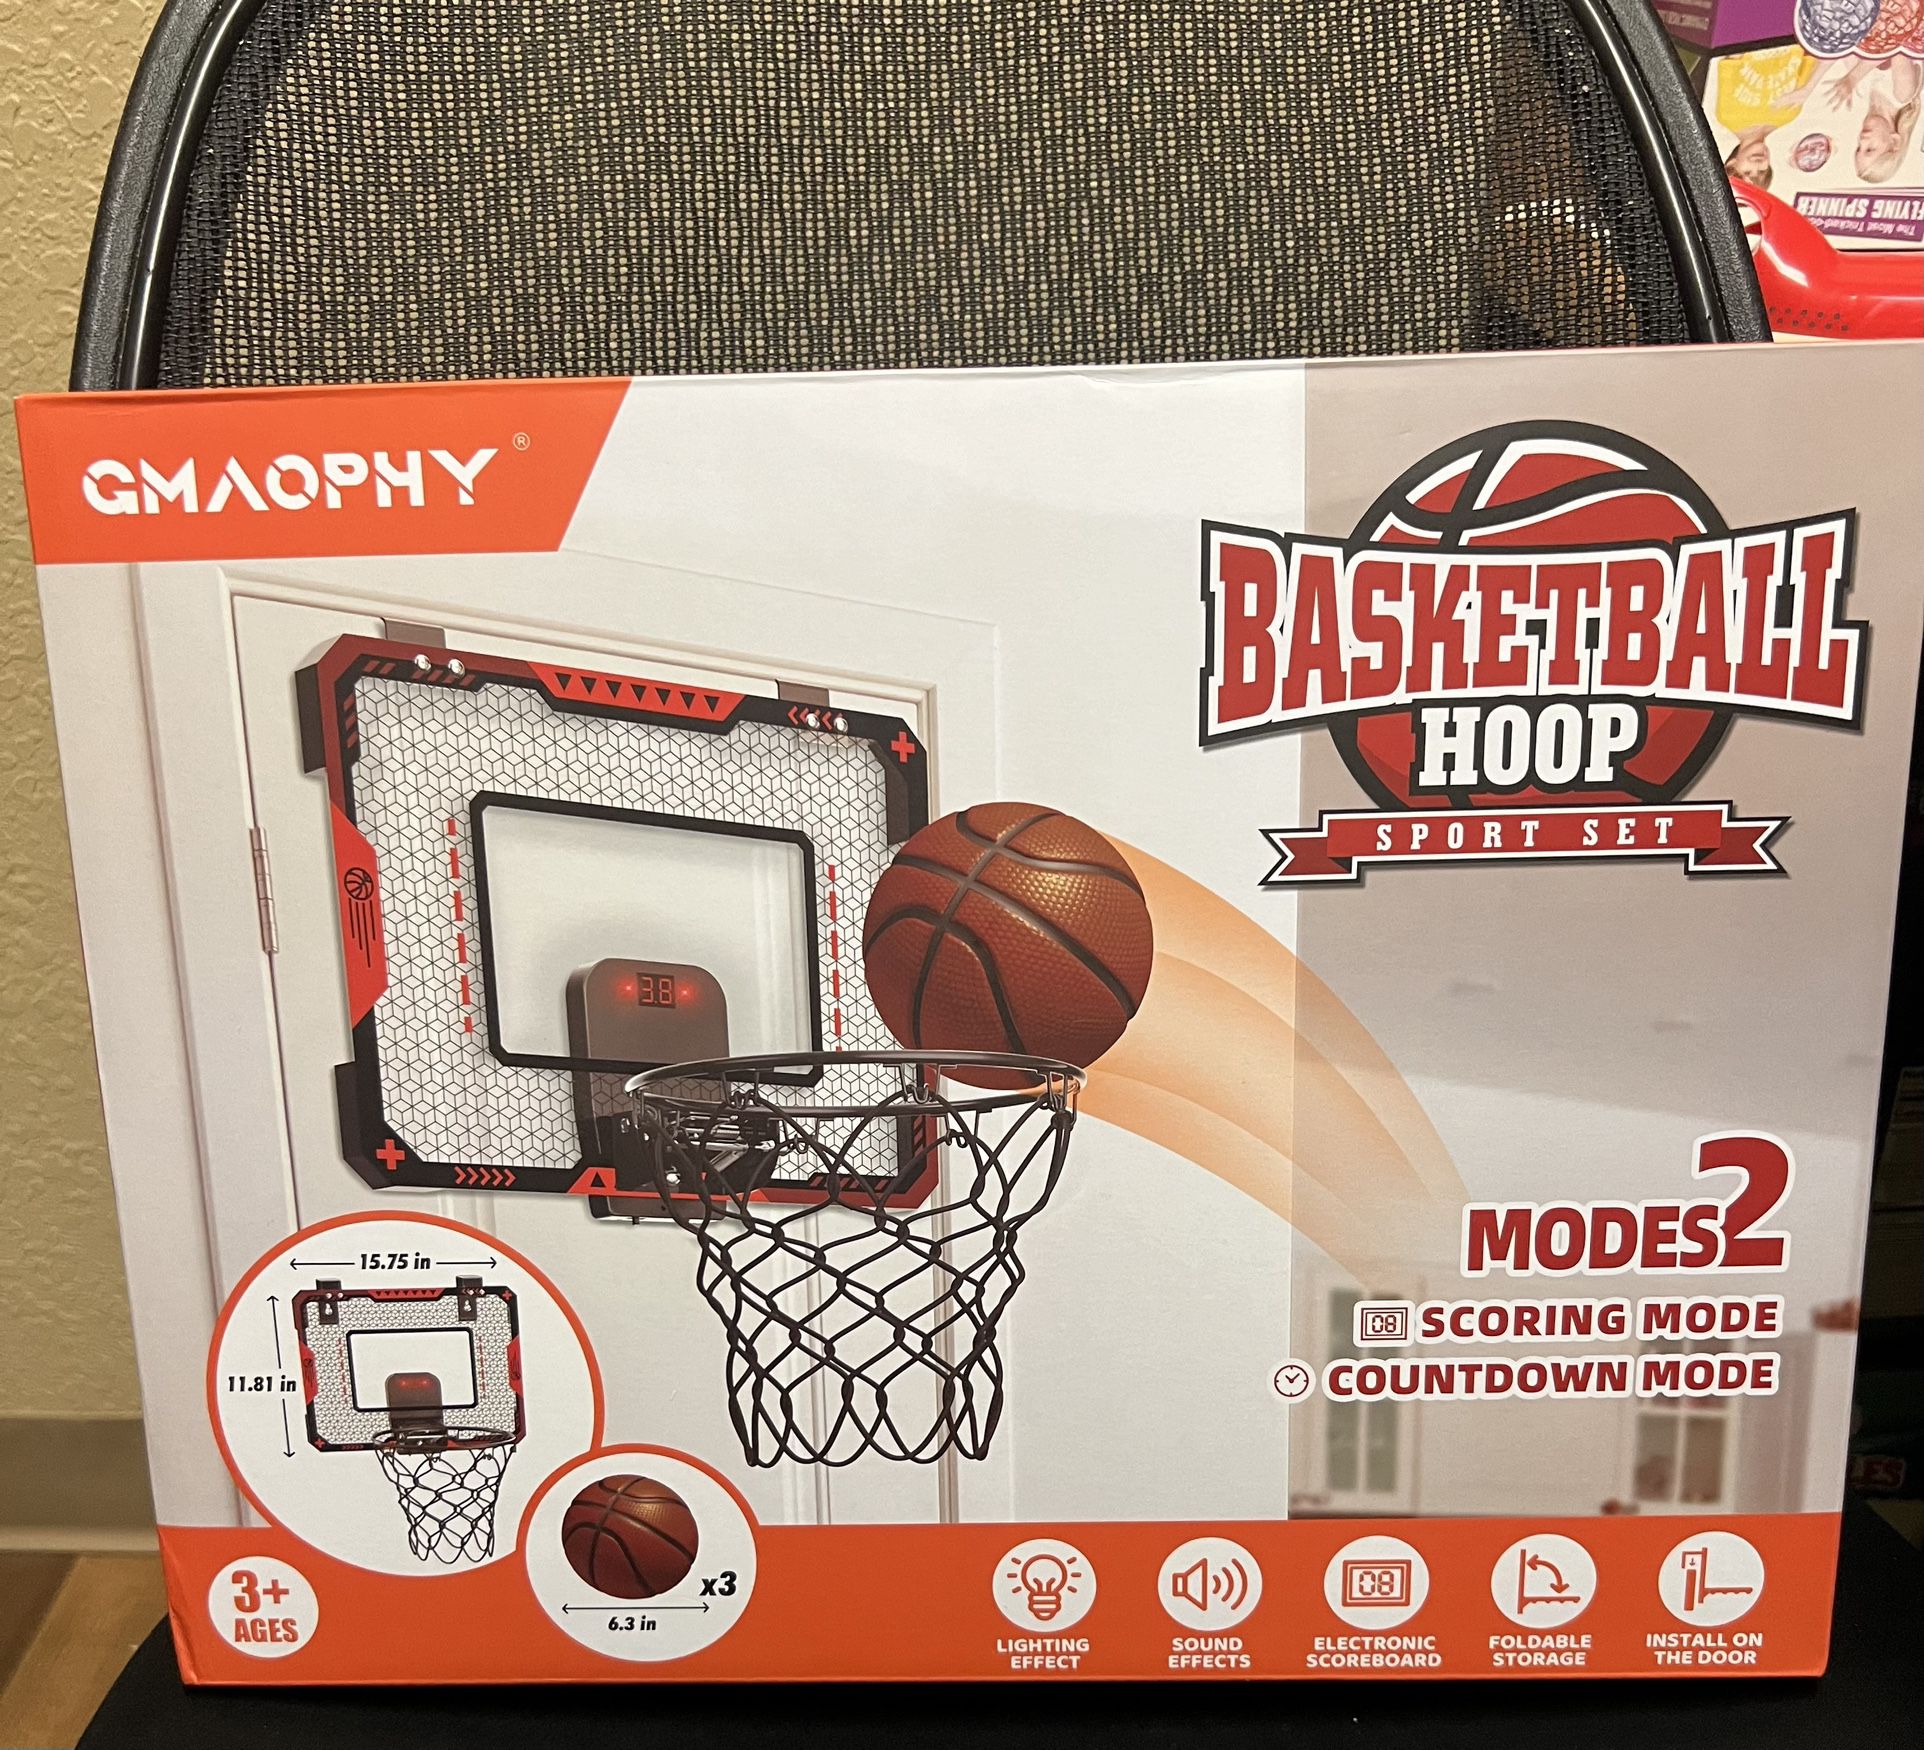 NEW Gmaophy Basketball Hoop Sport Set with Electronic Scoreboard